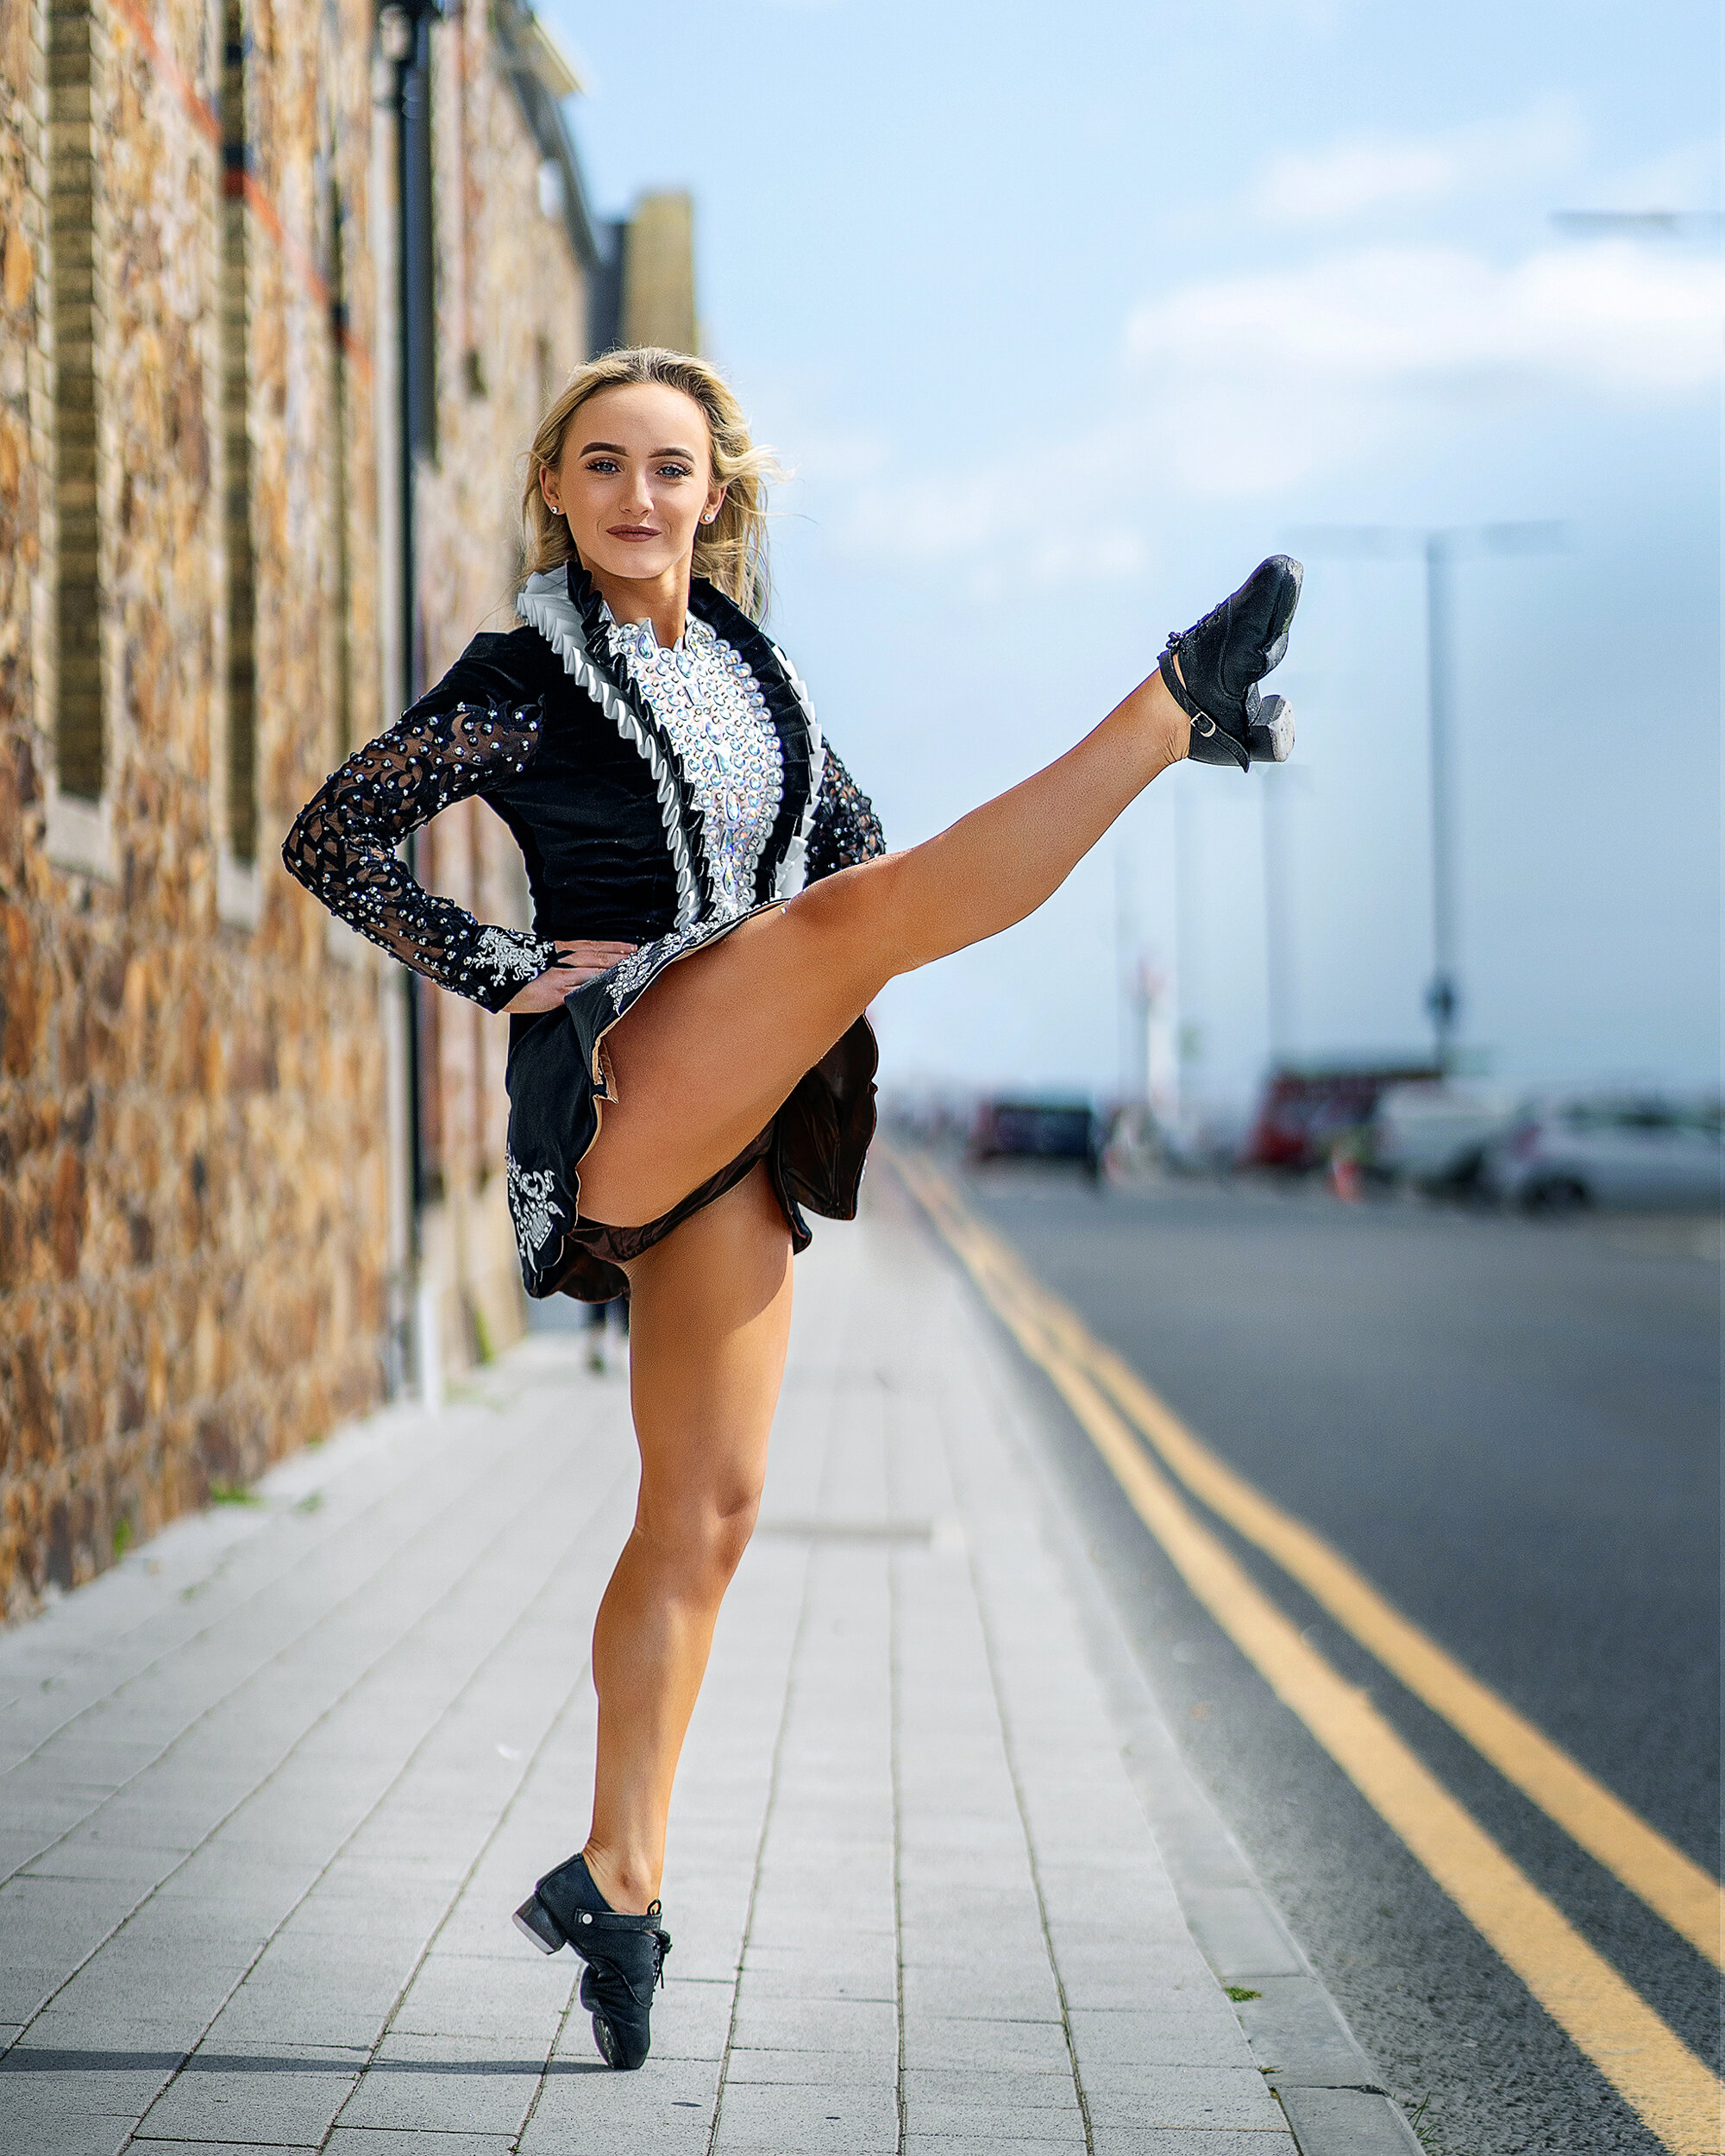 Irish dancer dancing on the street in Howth